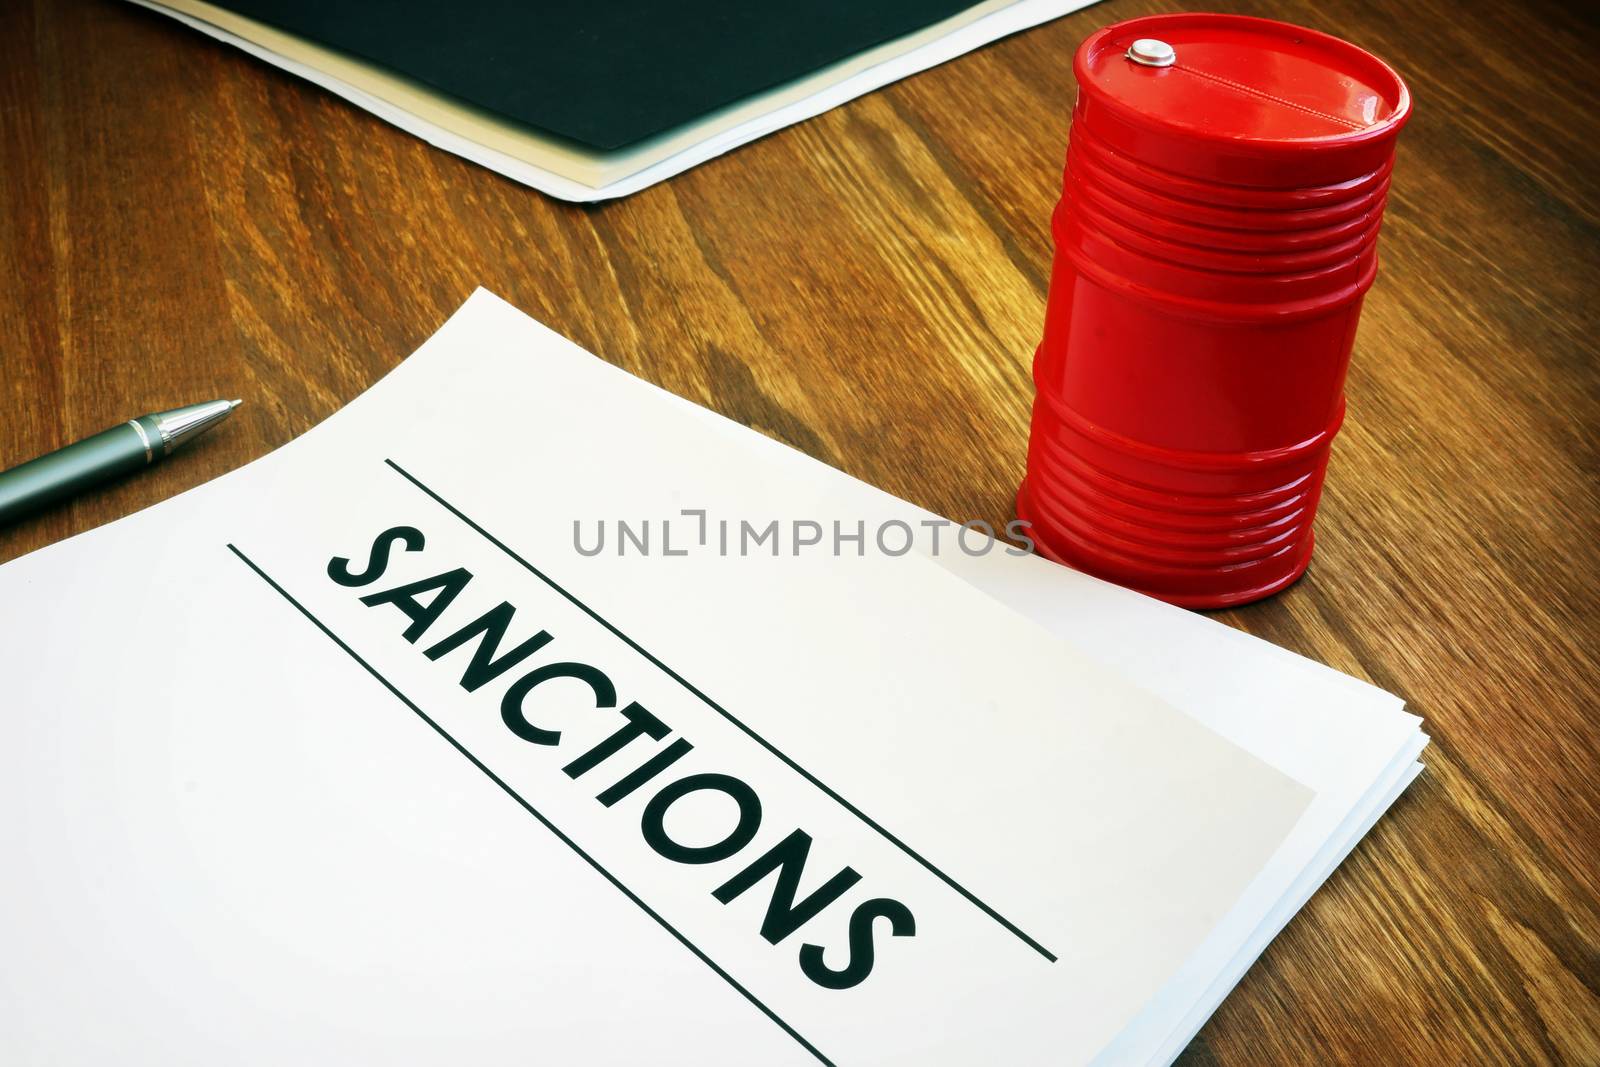 Sanctions list with model of oil barrel.